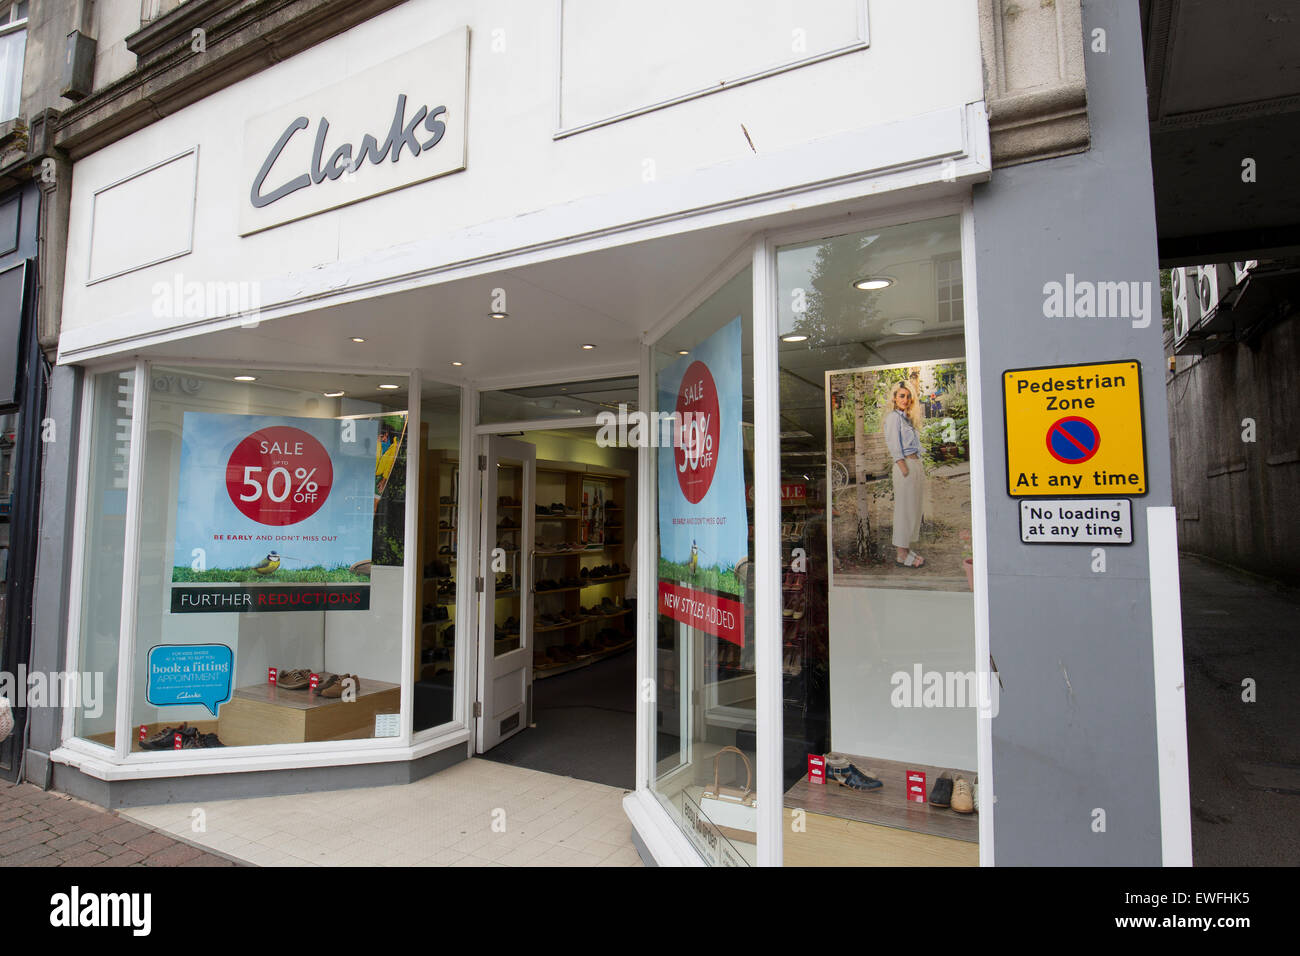 Clarks shoe shop store Kendal Stock Photo - Alamy